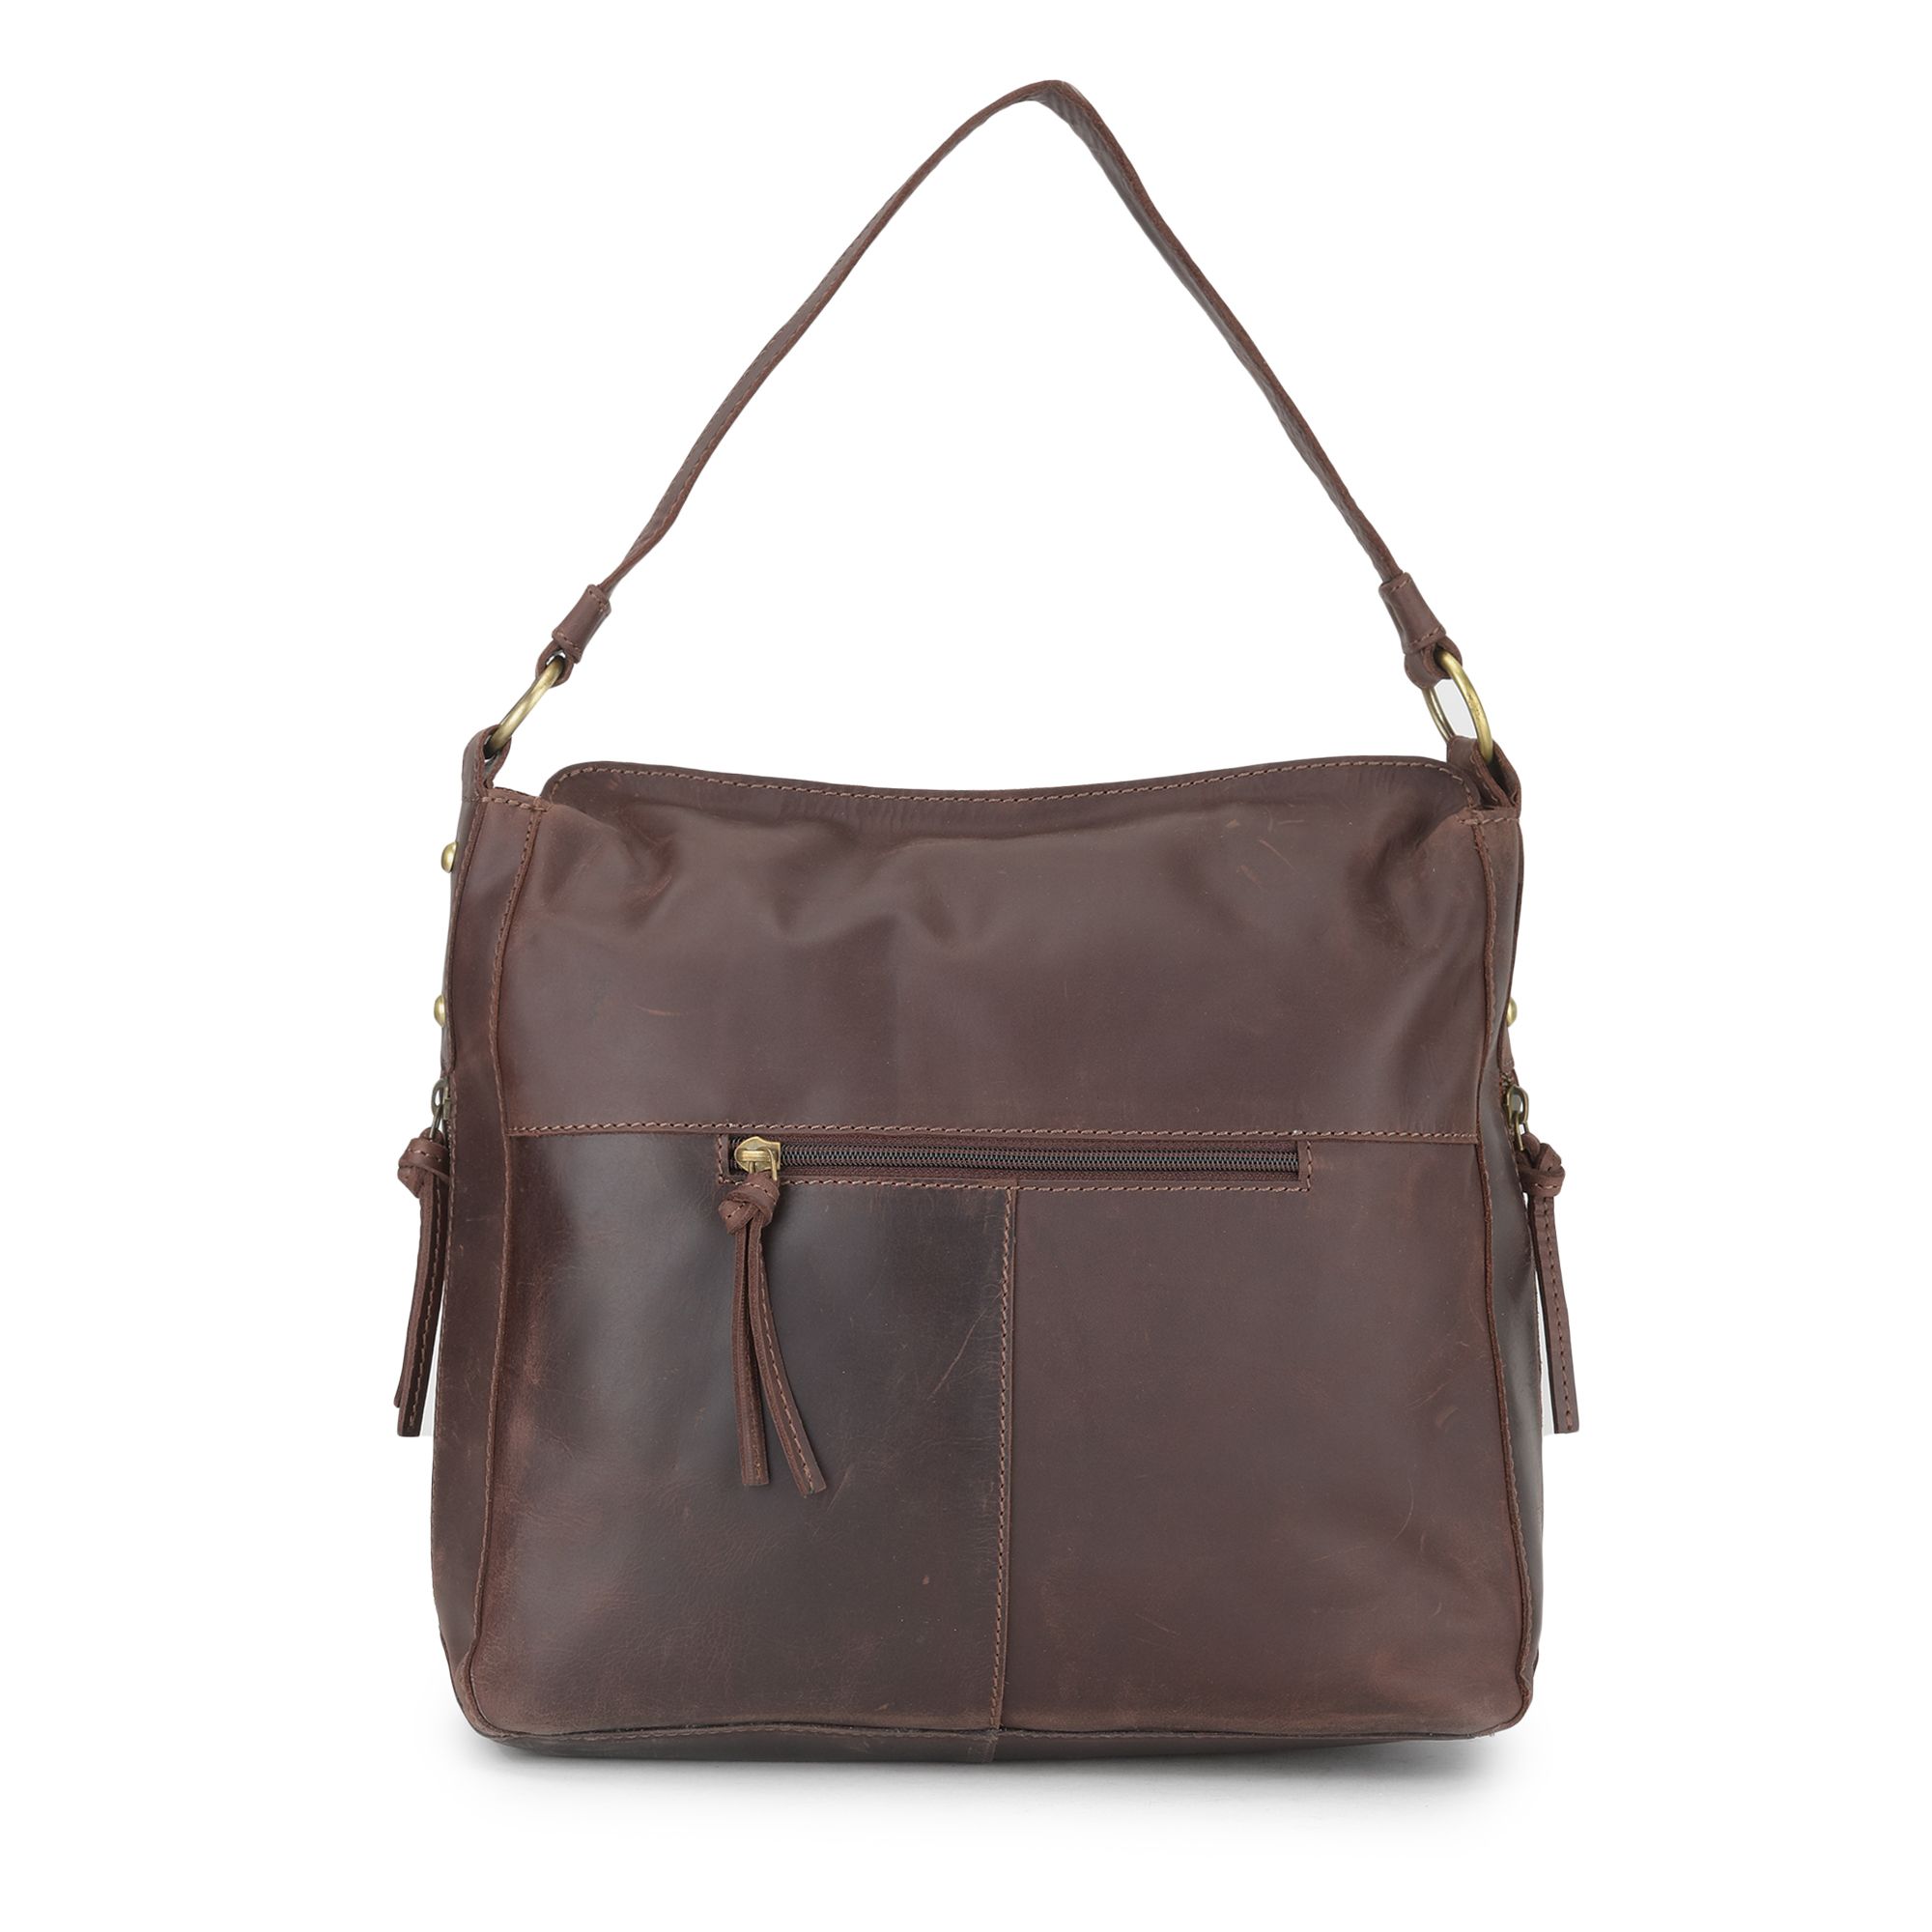 Brown handbag for women